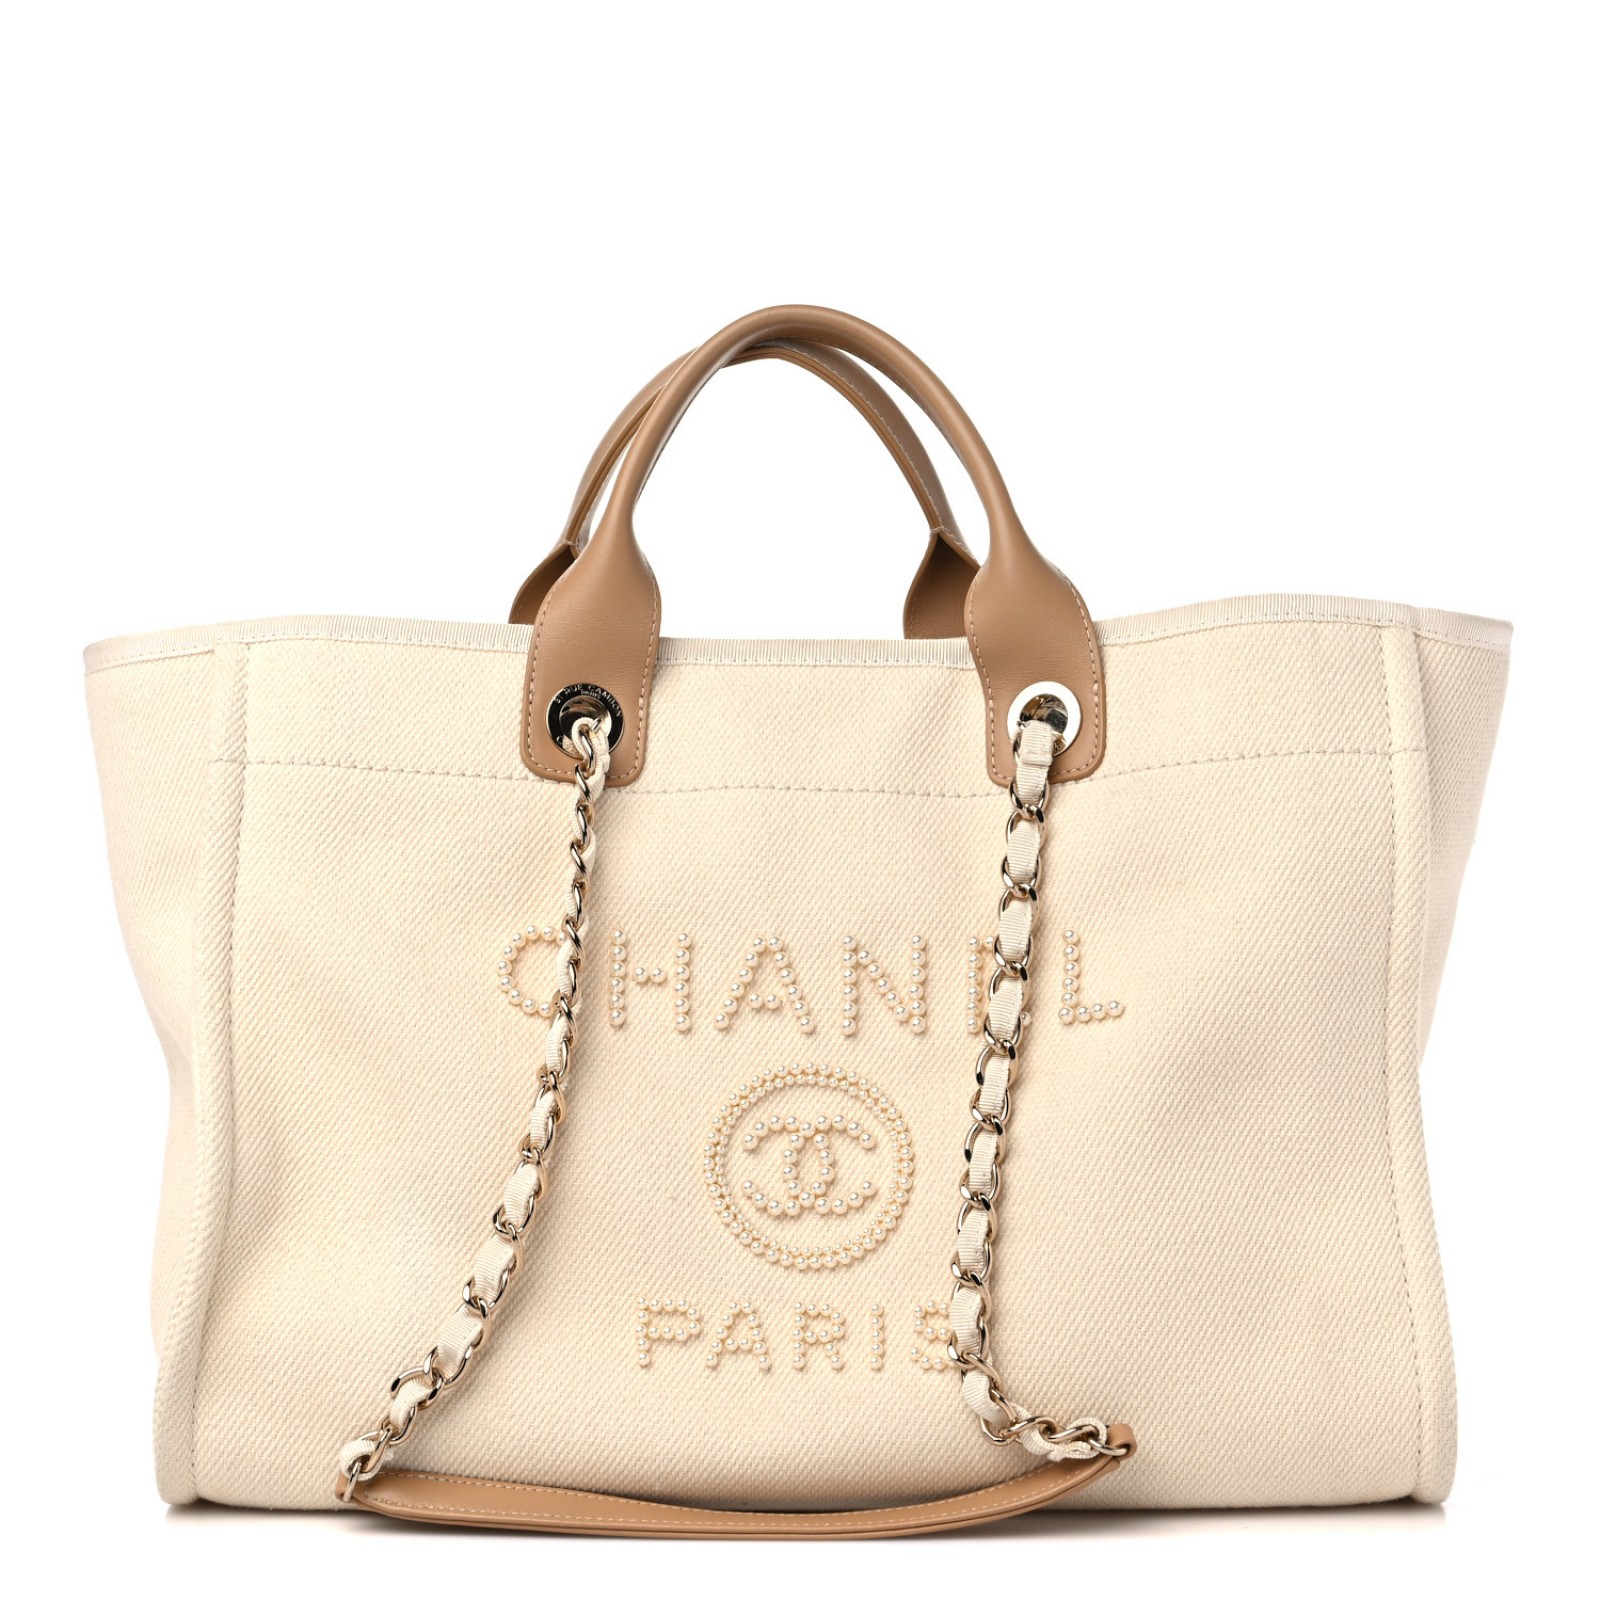 Chanel Medium Deauville Tote Bag